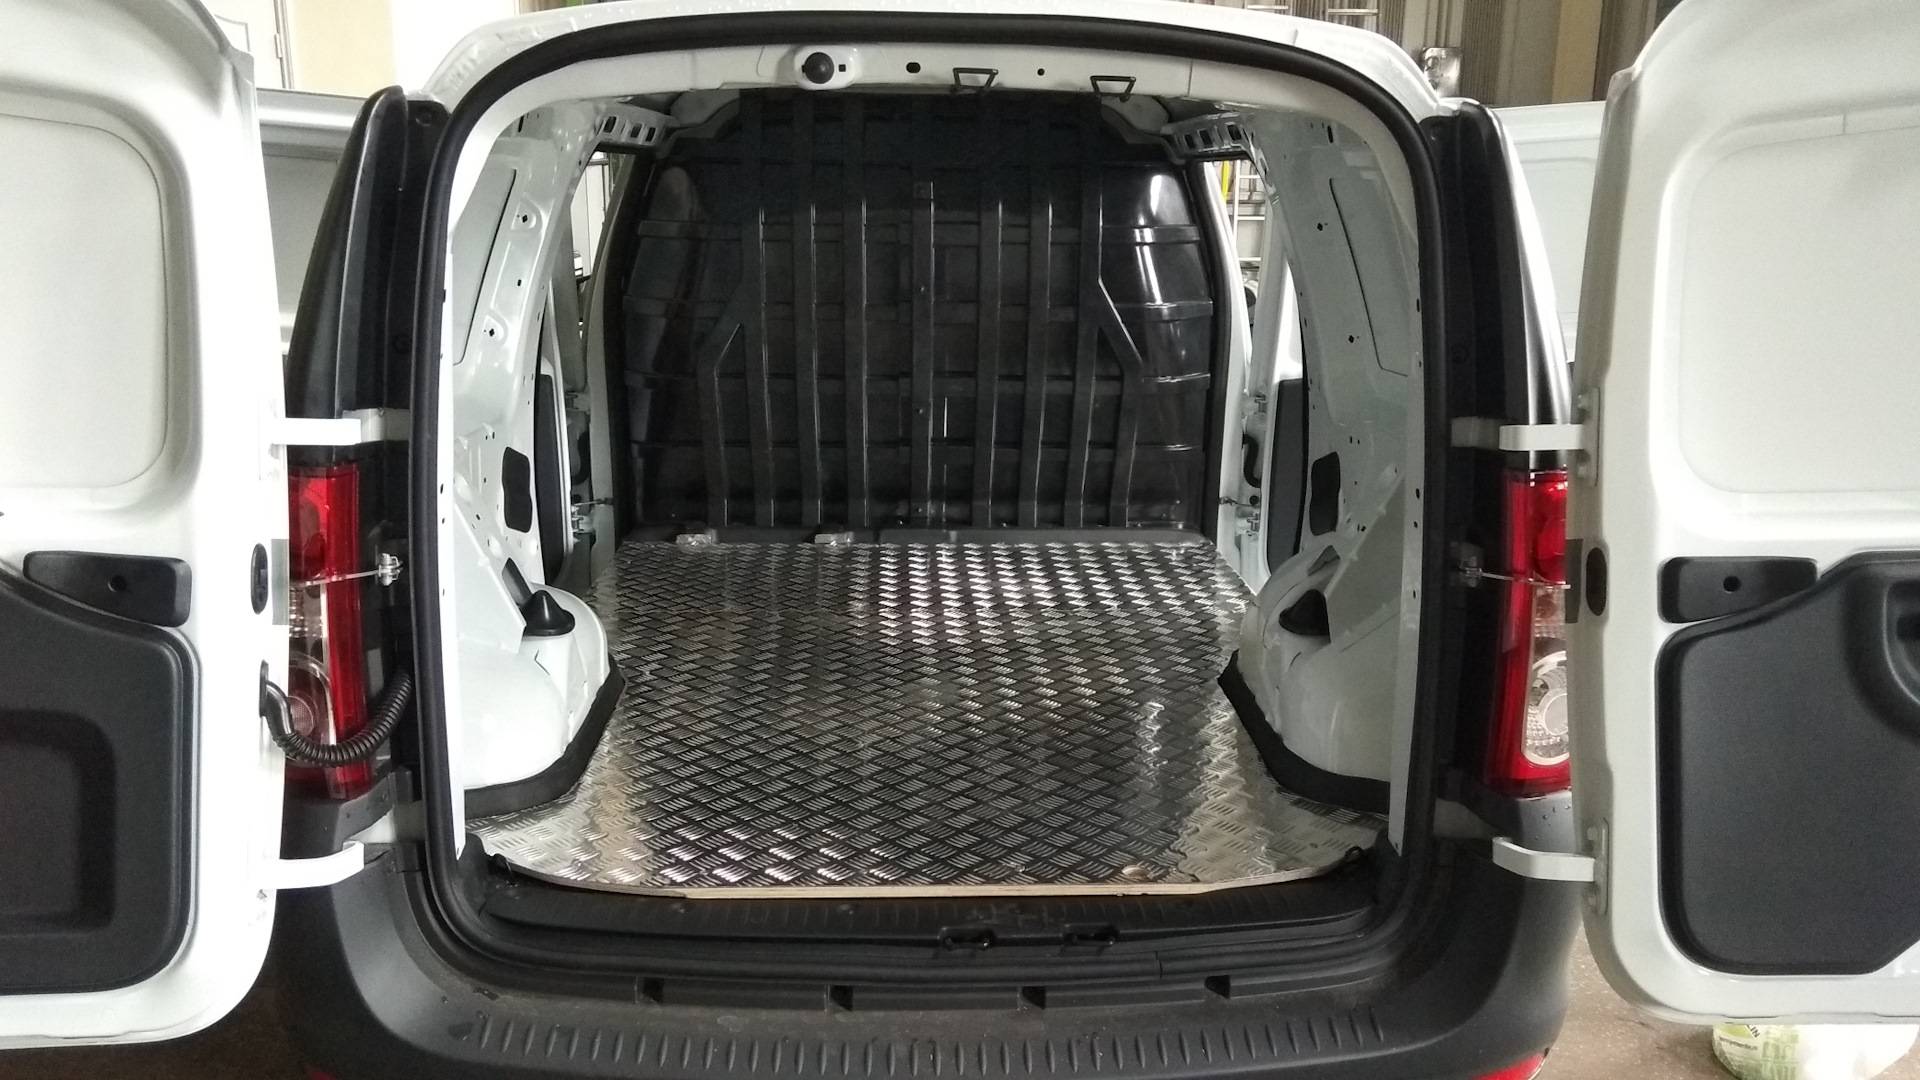 Лада ларгус кузов фургон: размеры грузового отсека, объём багажника